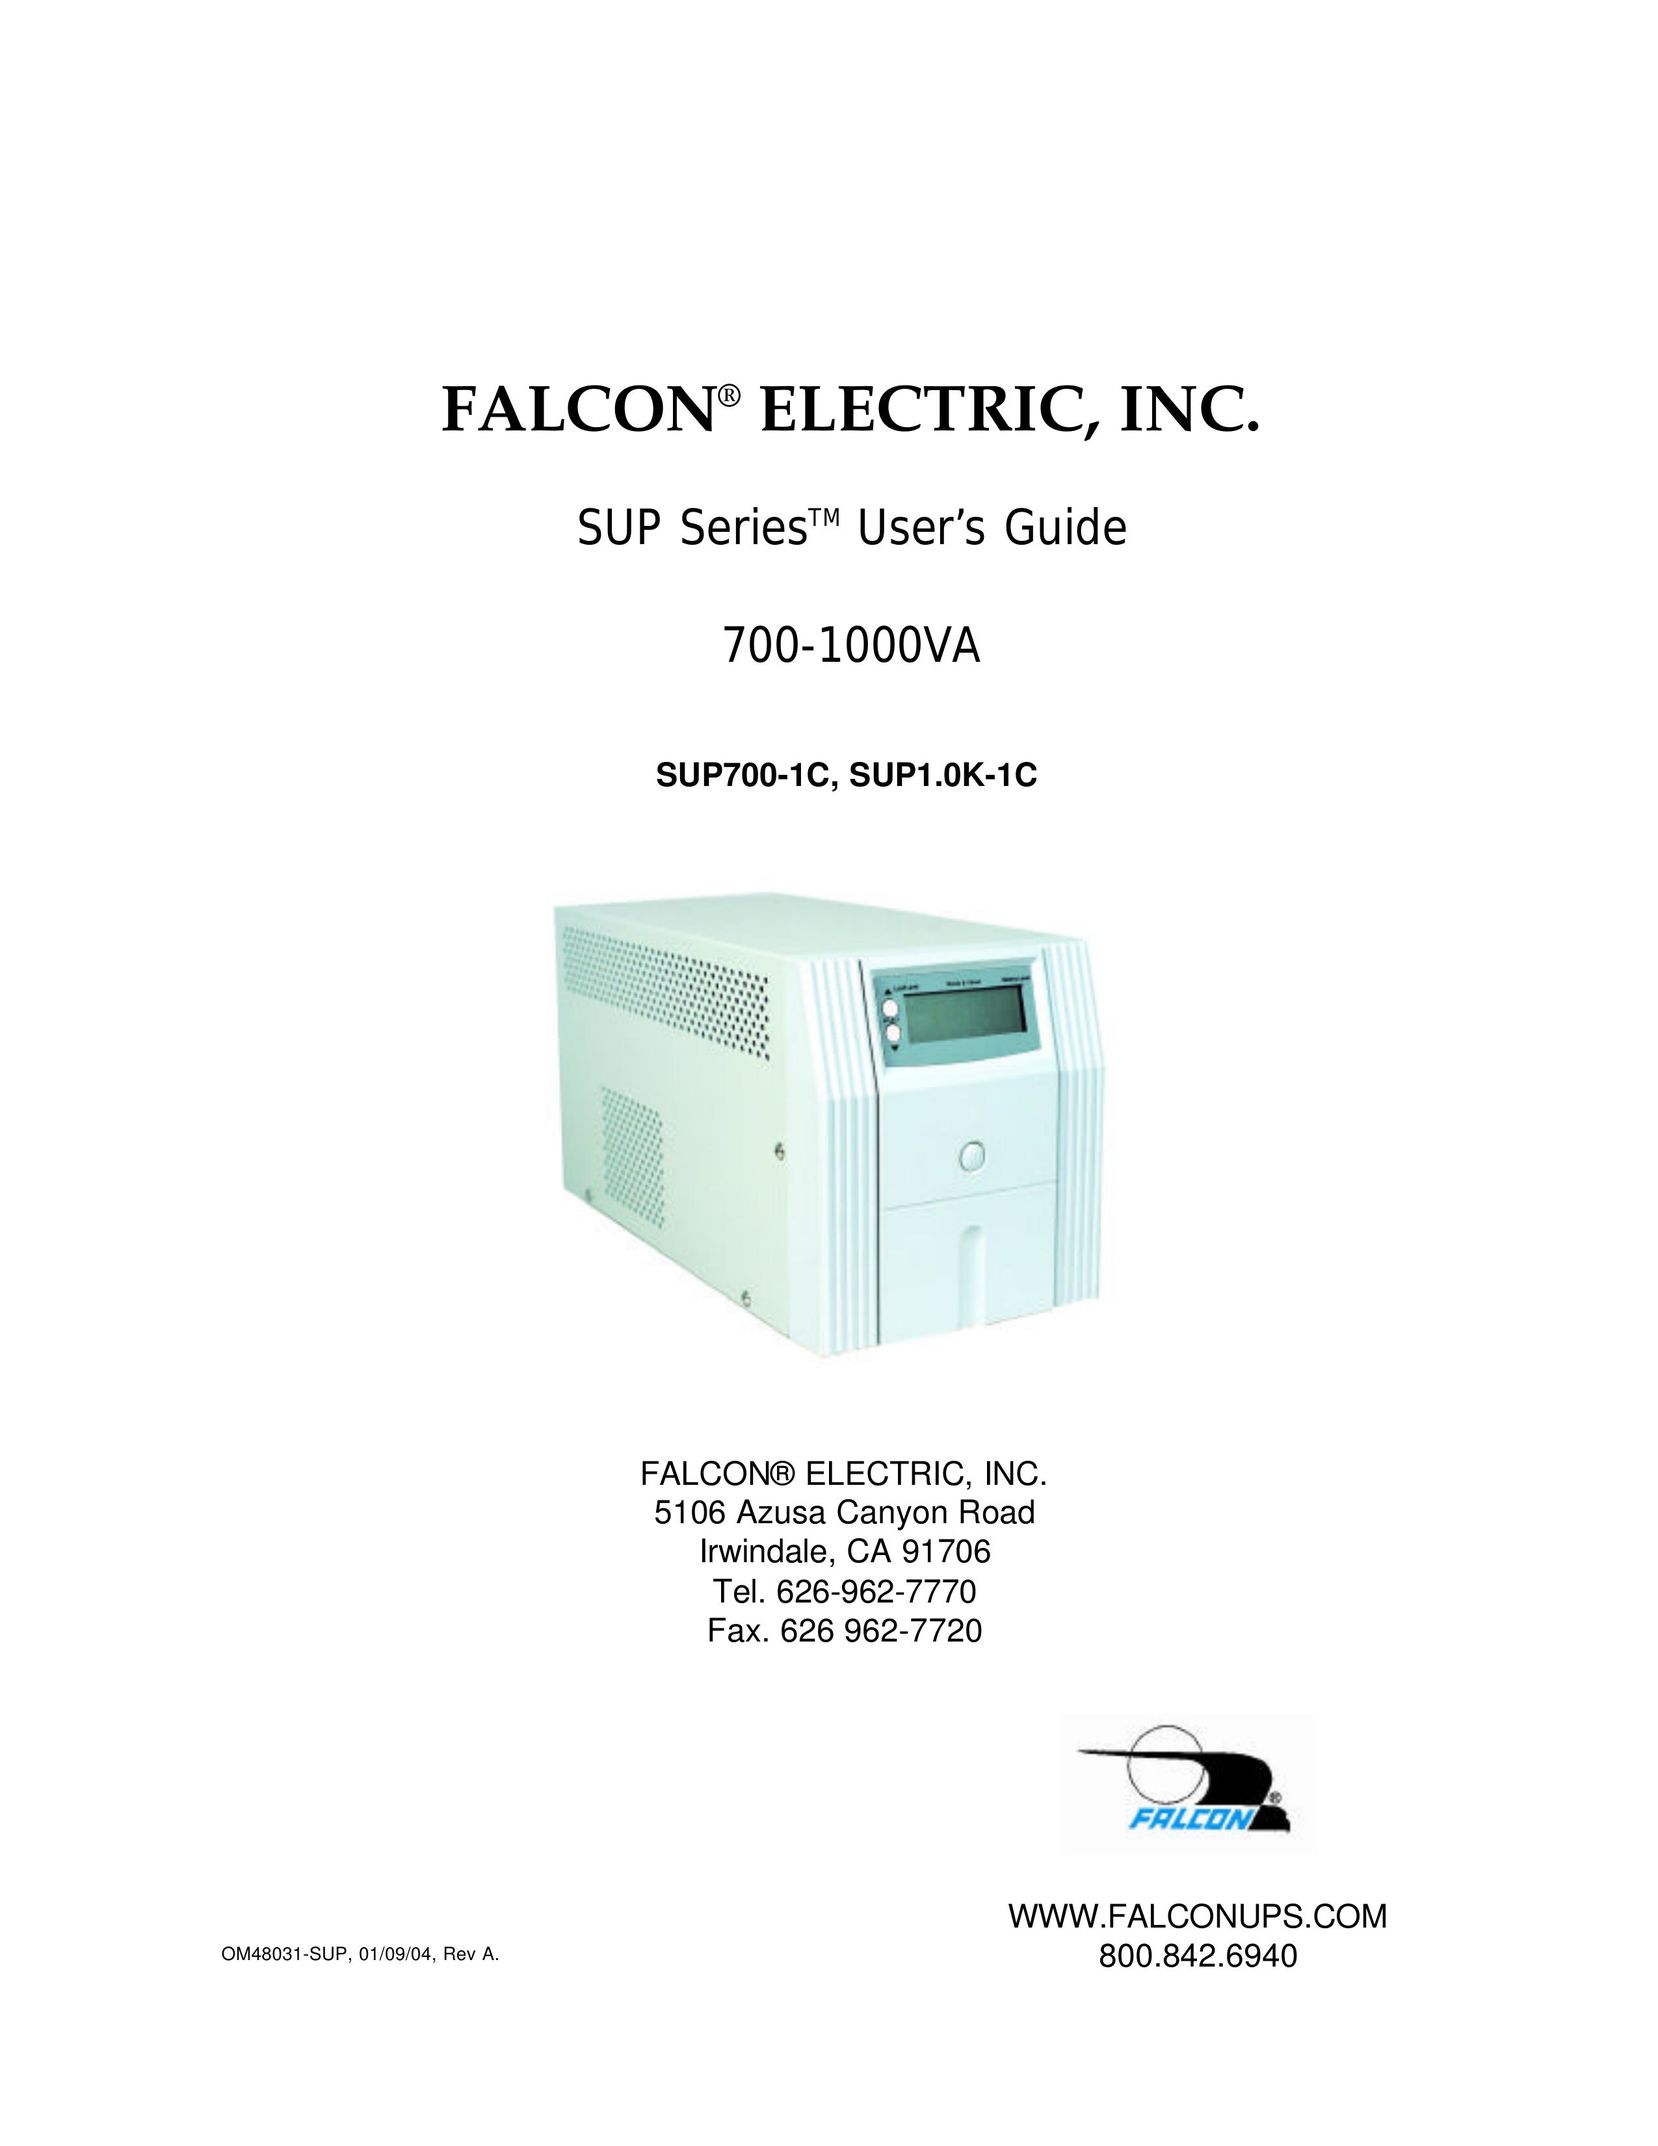 Falcon SUP700-1C Power Supply User Manual